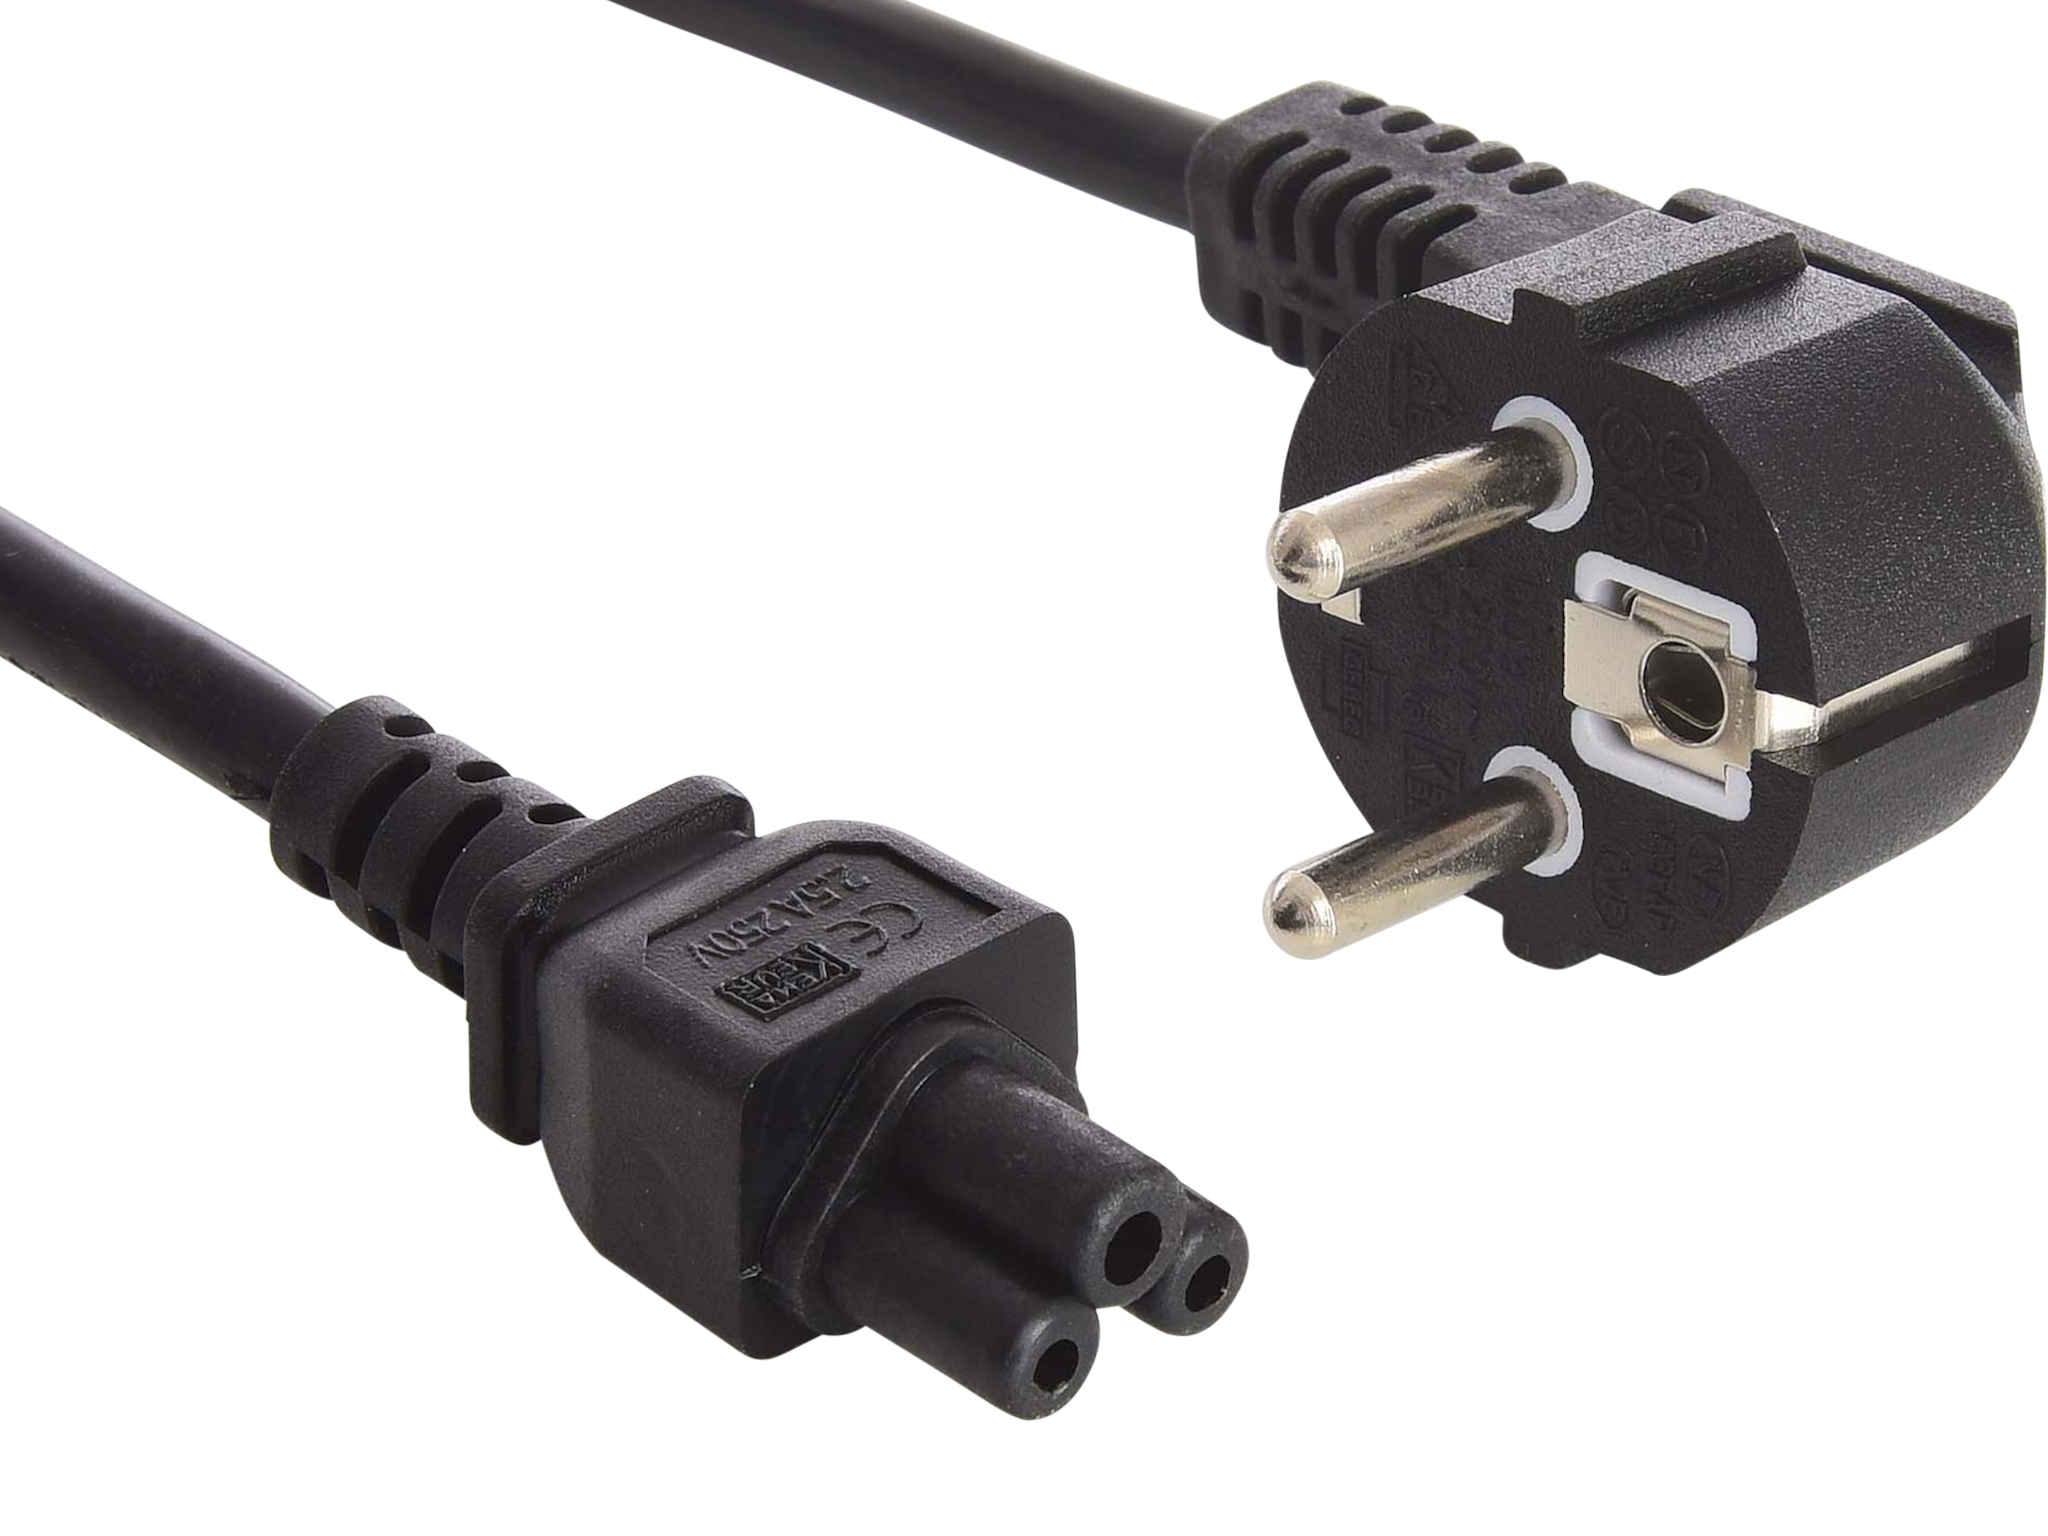 Шнур питания 8. Power Cord - кабель питания 220v. Удлинитель кабеля питания 8m-8f. Кабель питания ATCOM at16134, 1.8м, 2 Pin. Voltman PC Power Cable 1.5m.